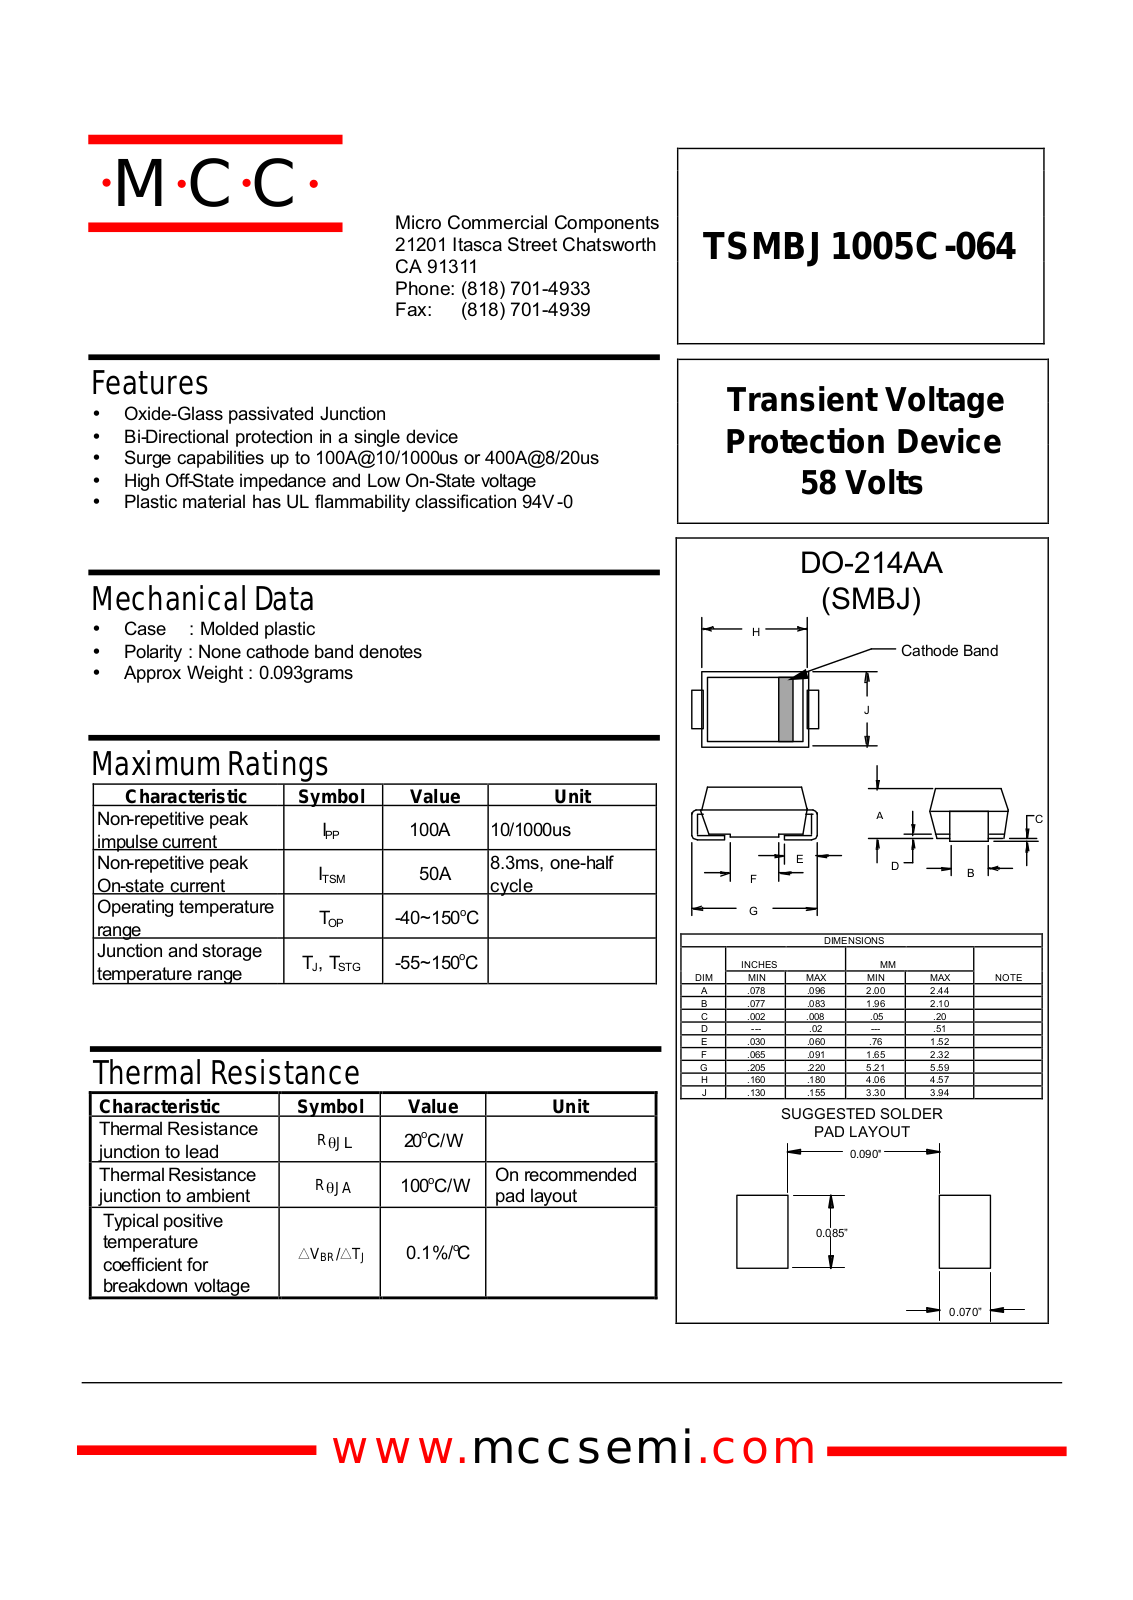 MCC TSMBJ1005C-064 Datasheet